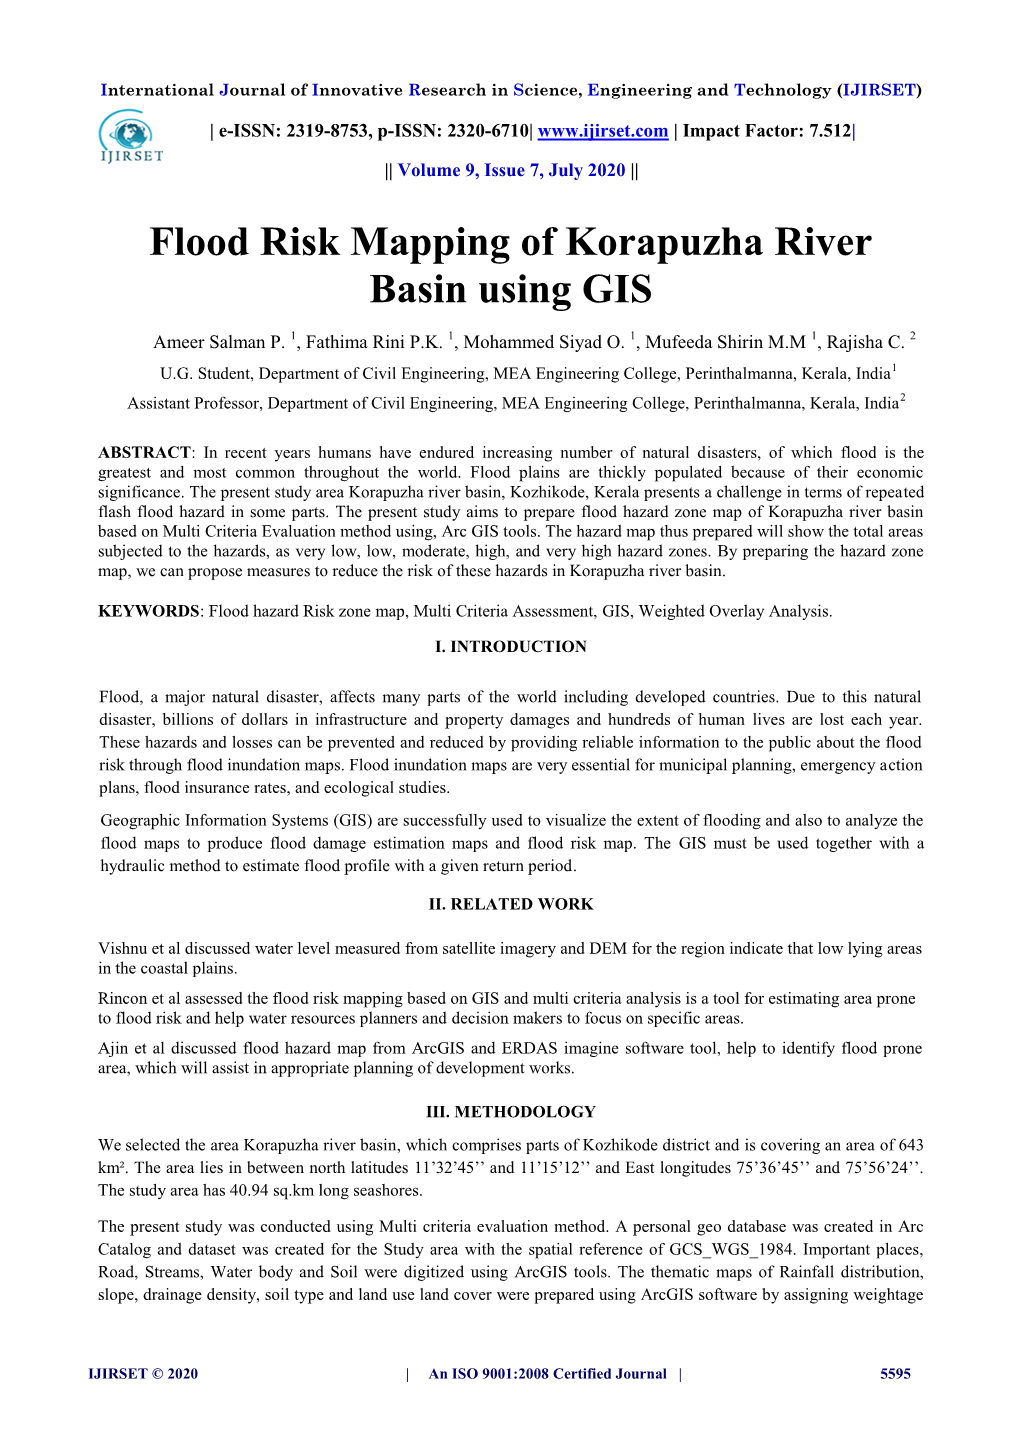 Flood Risk Mapping of Korapuzha River Basin Using GIS